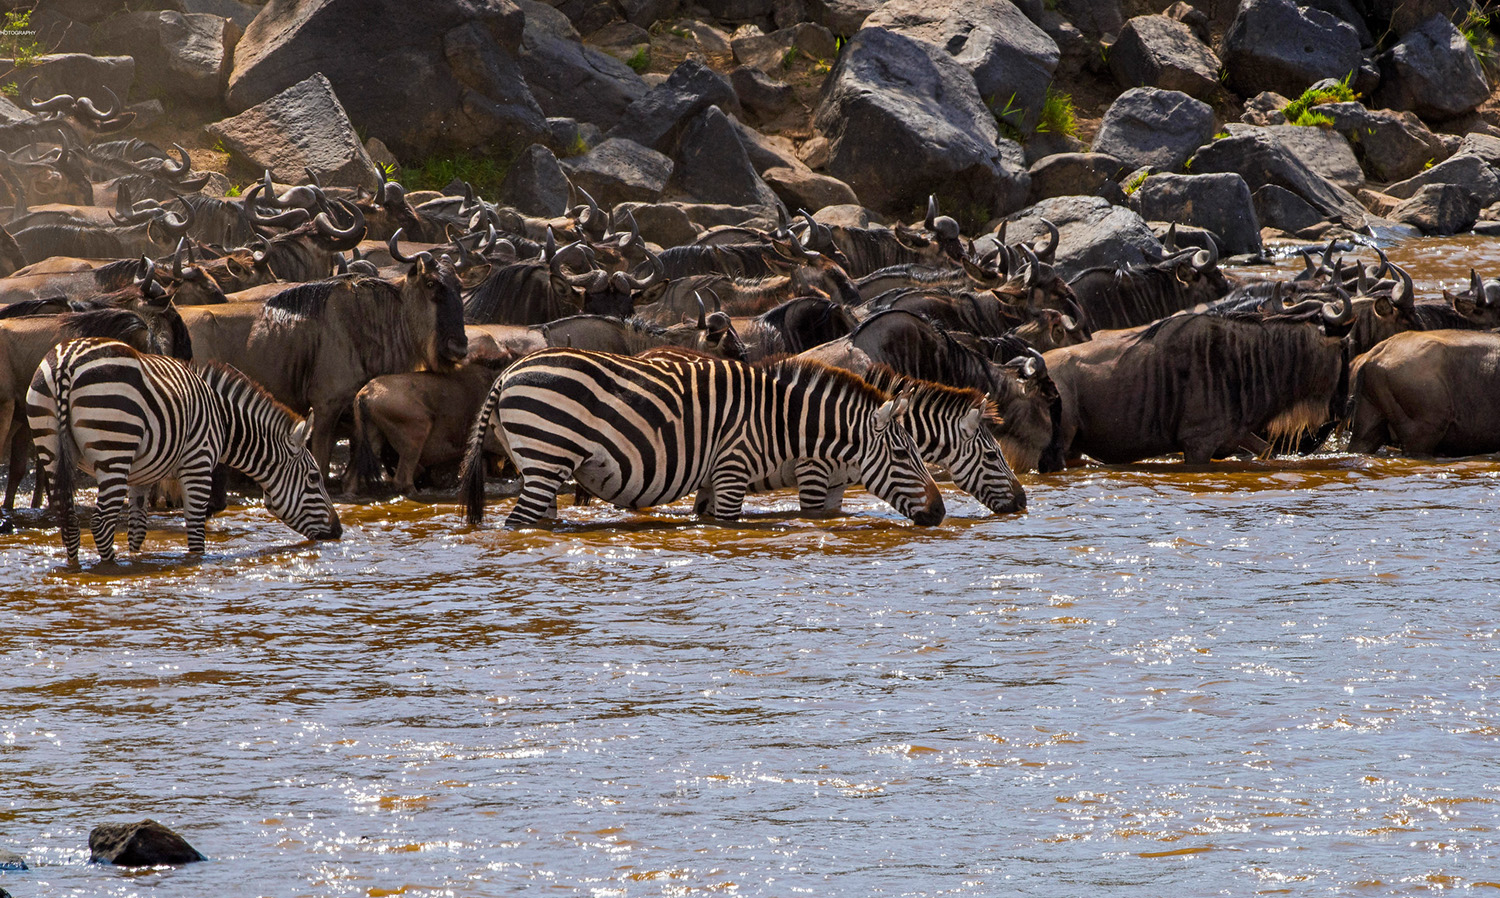 The great wildebeest and zebra migration